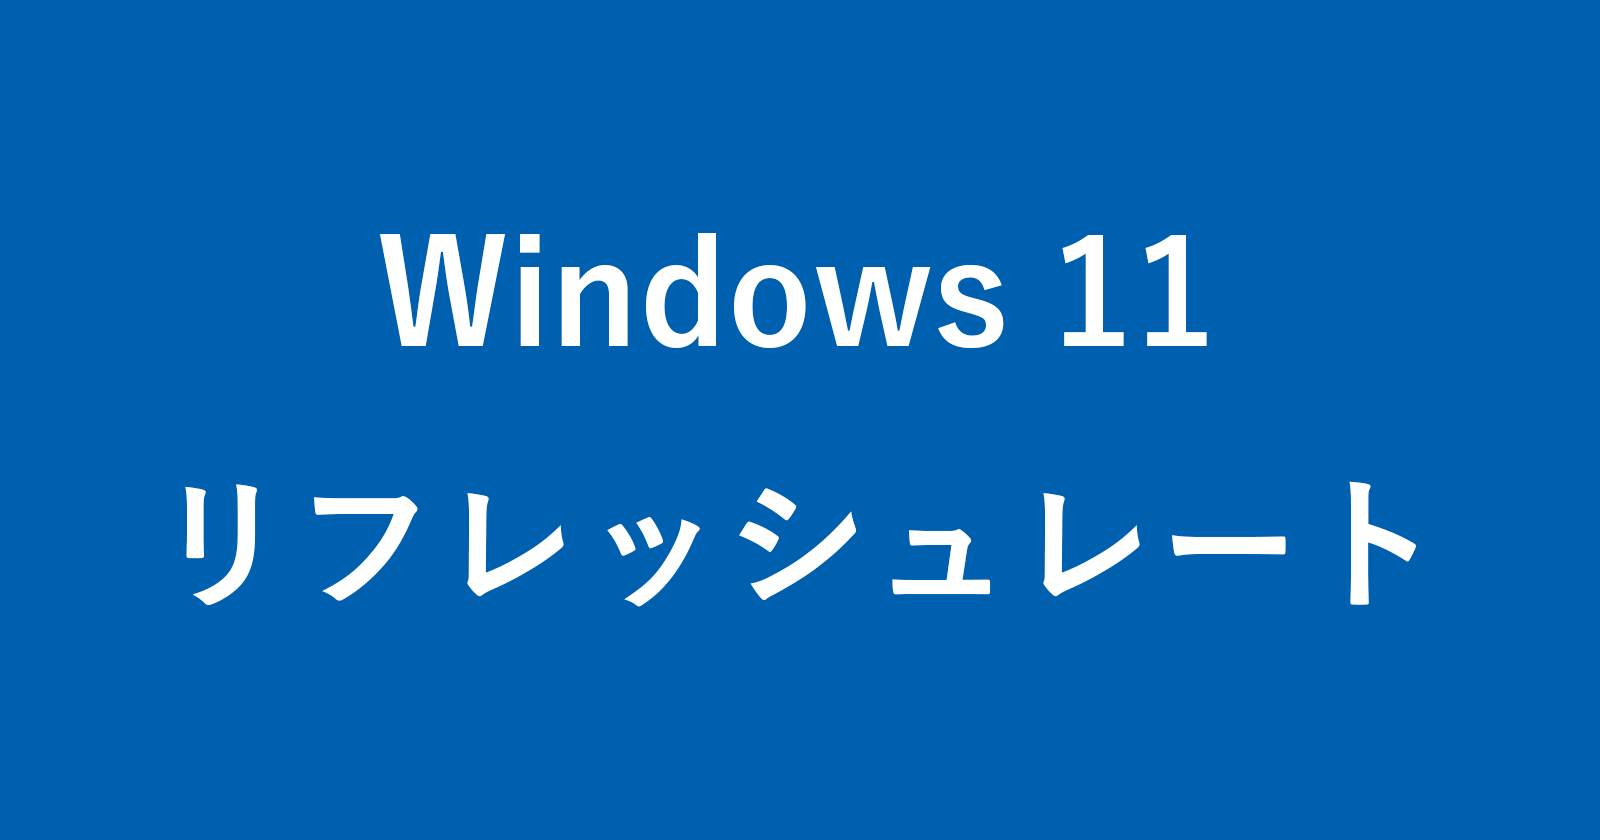 windows 11 refresh rate